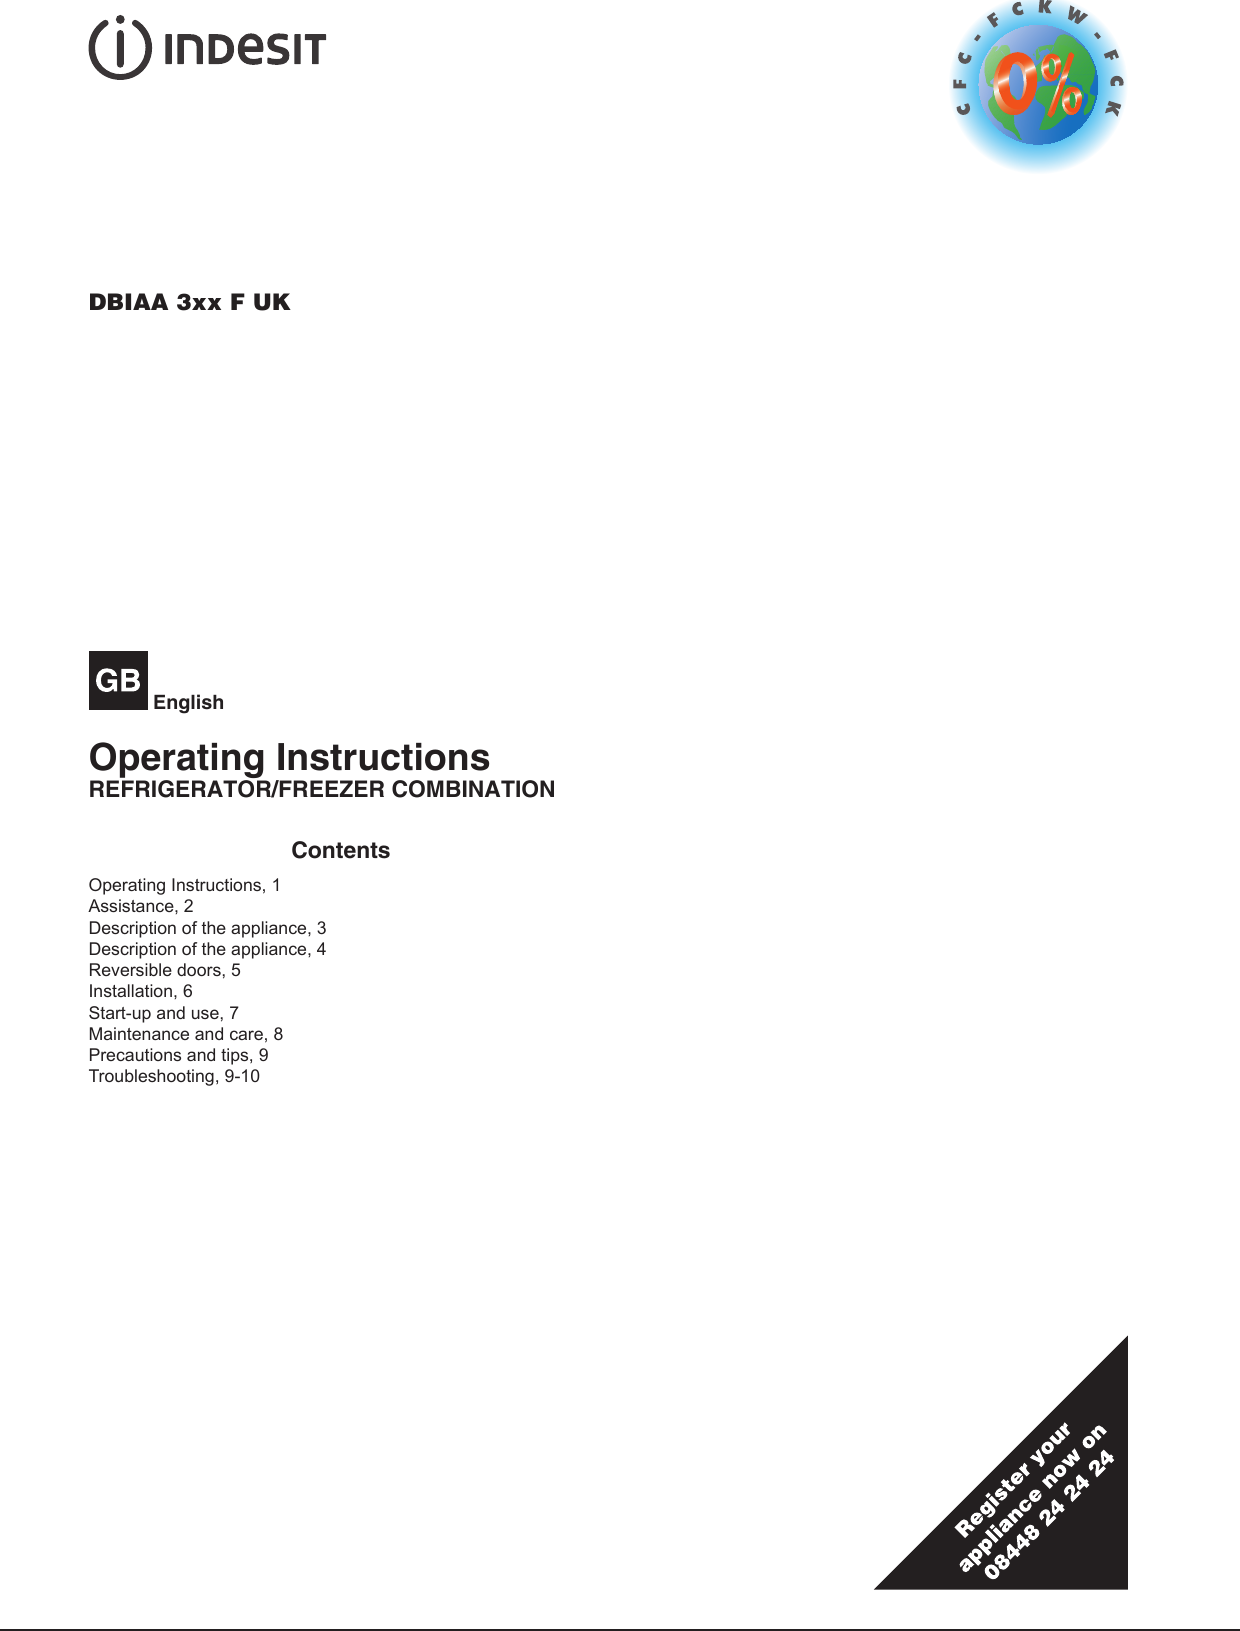 Page 1 of 12 - Indesit Indesit-Dbiaa344F-Uk-Operating-Instructions-  Indesit-dbiaa344f-uk-operating-instructions